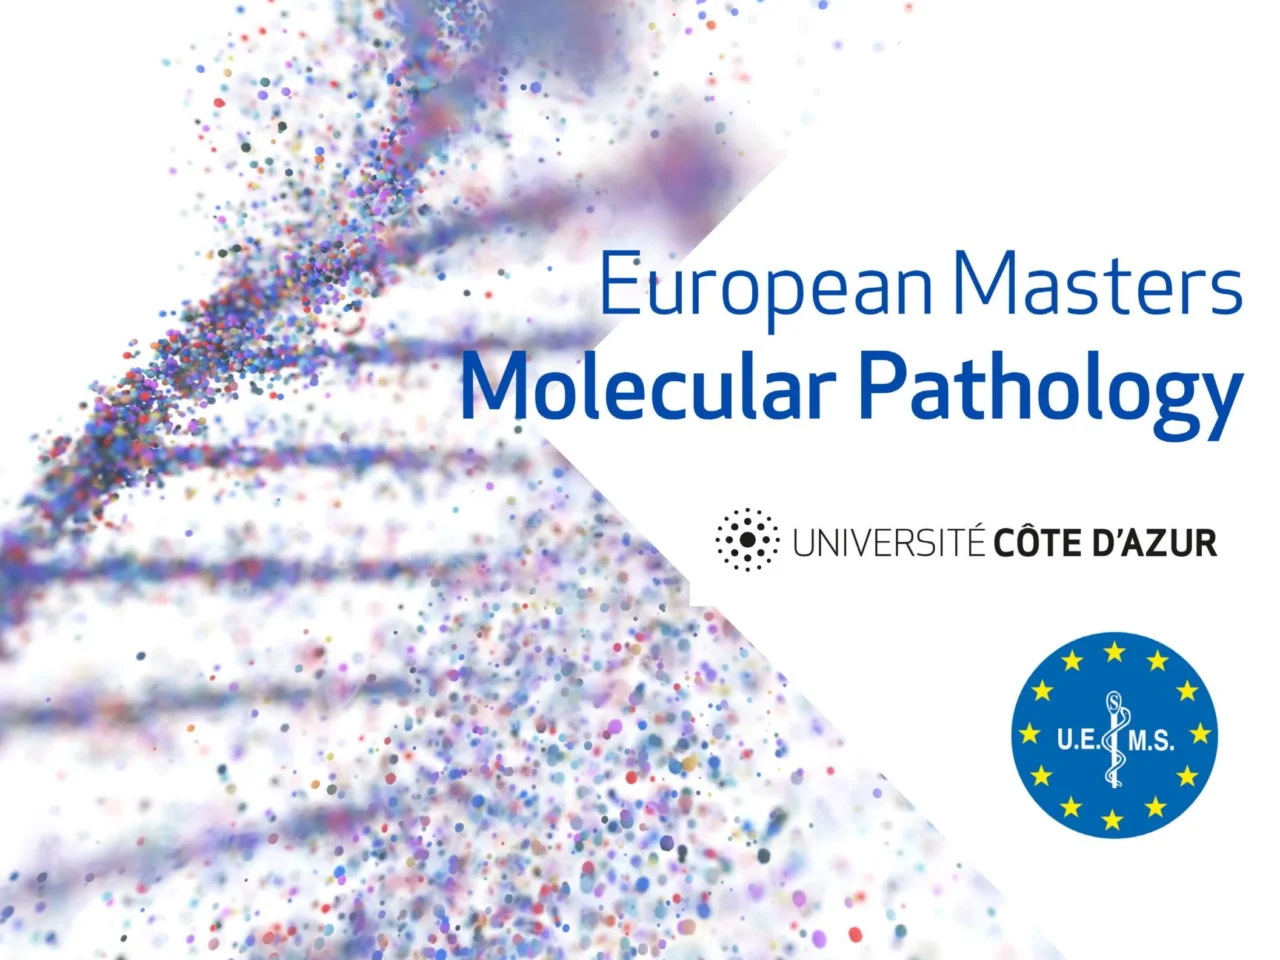 Chris Poulios: Module 6 of the European Masters Molecular Pathology is on now